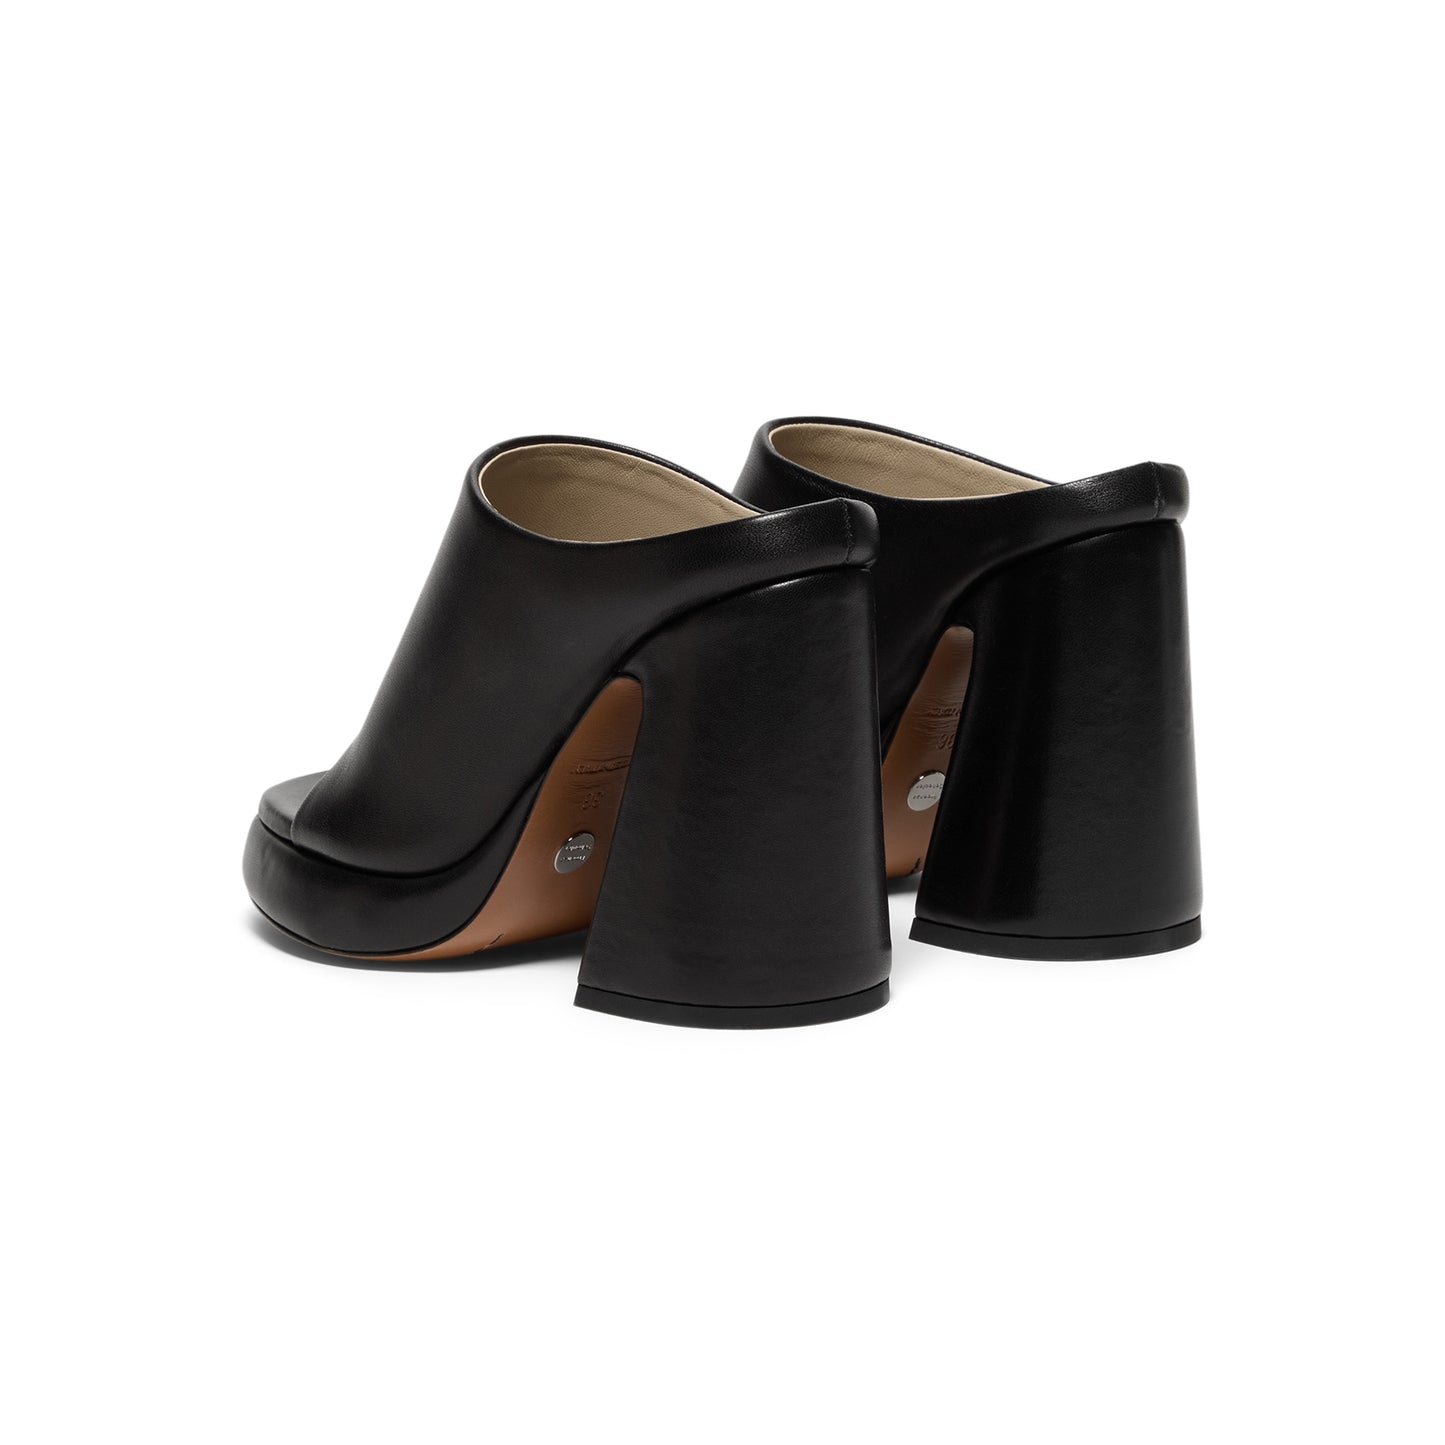 Proenza Schouler Forma Platform Sandals (Black)